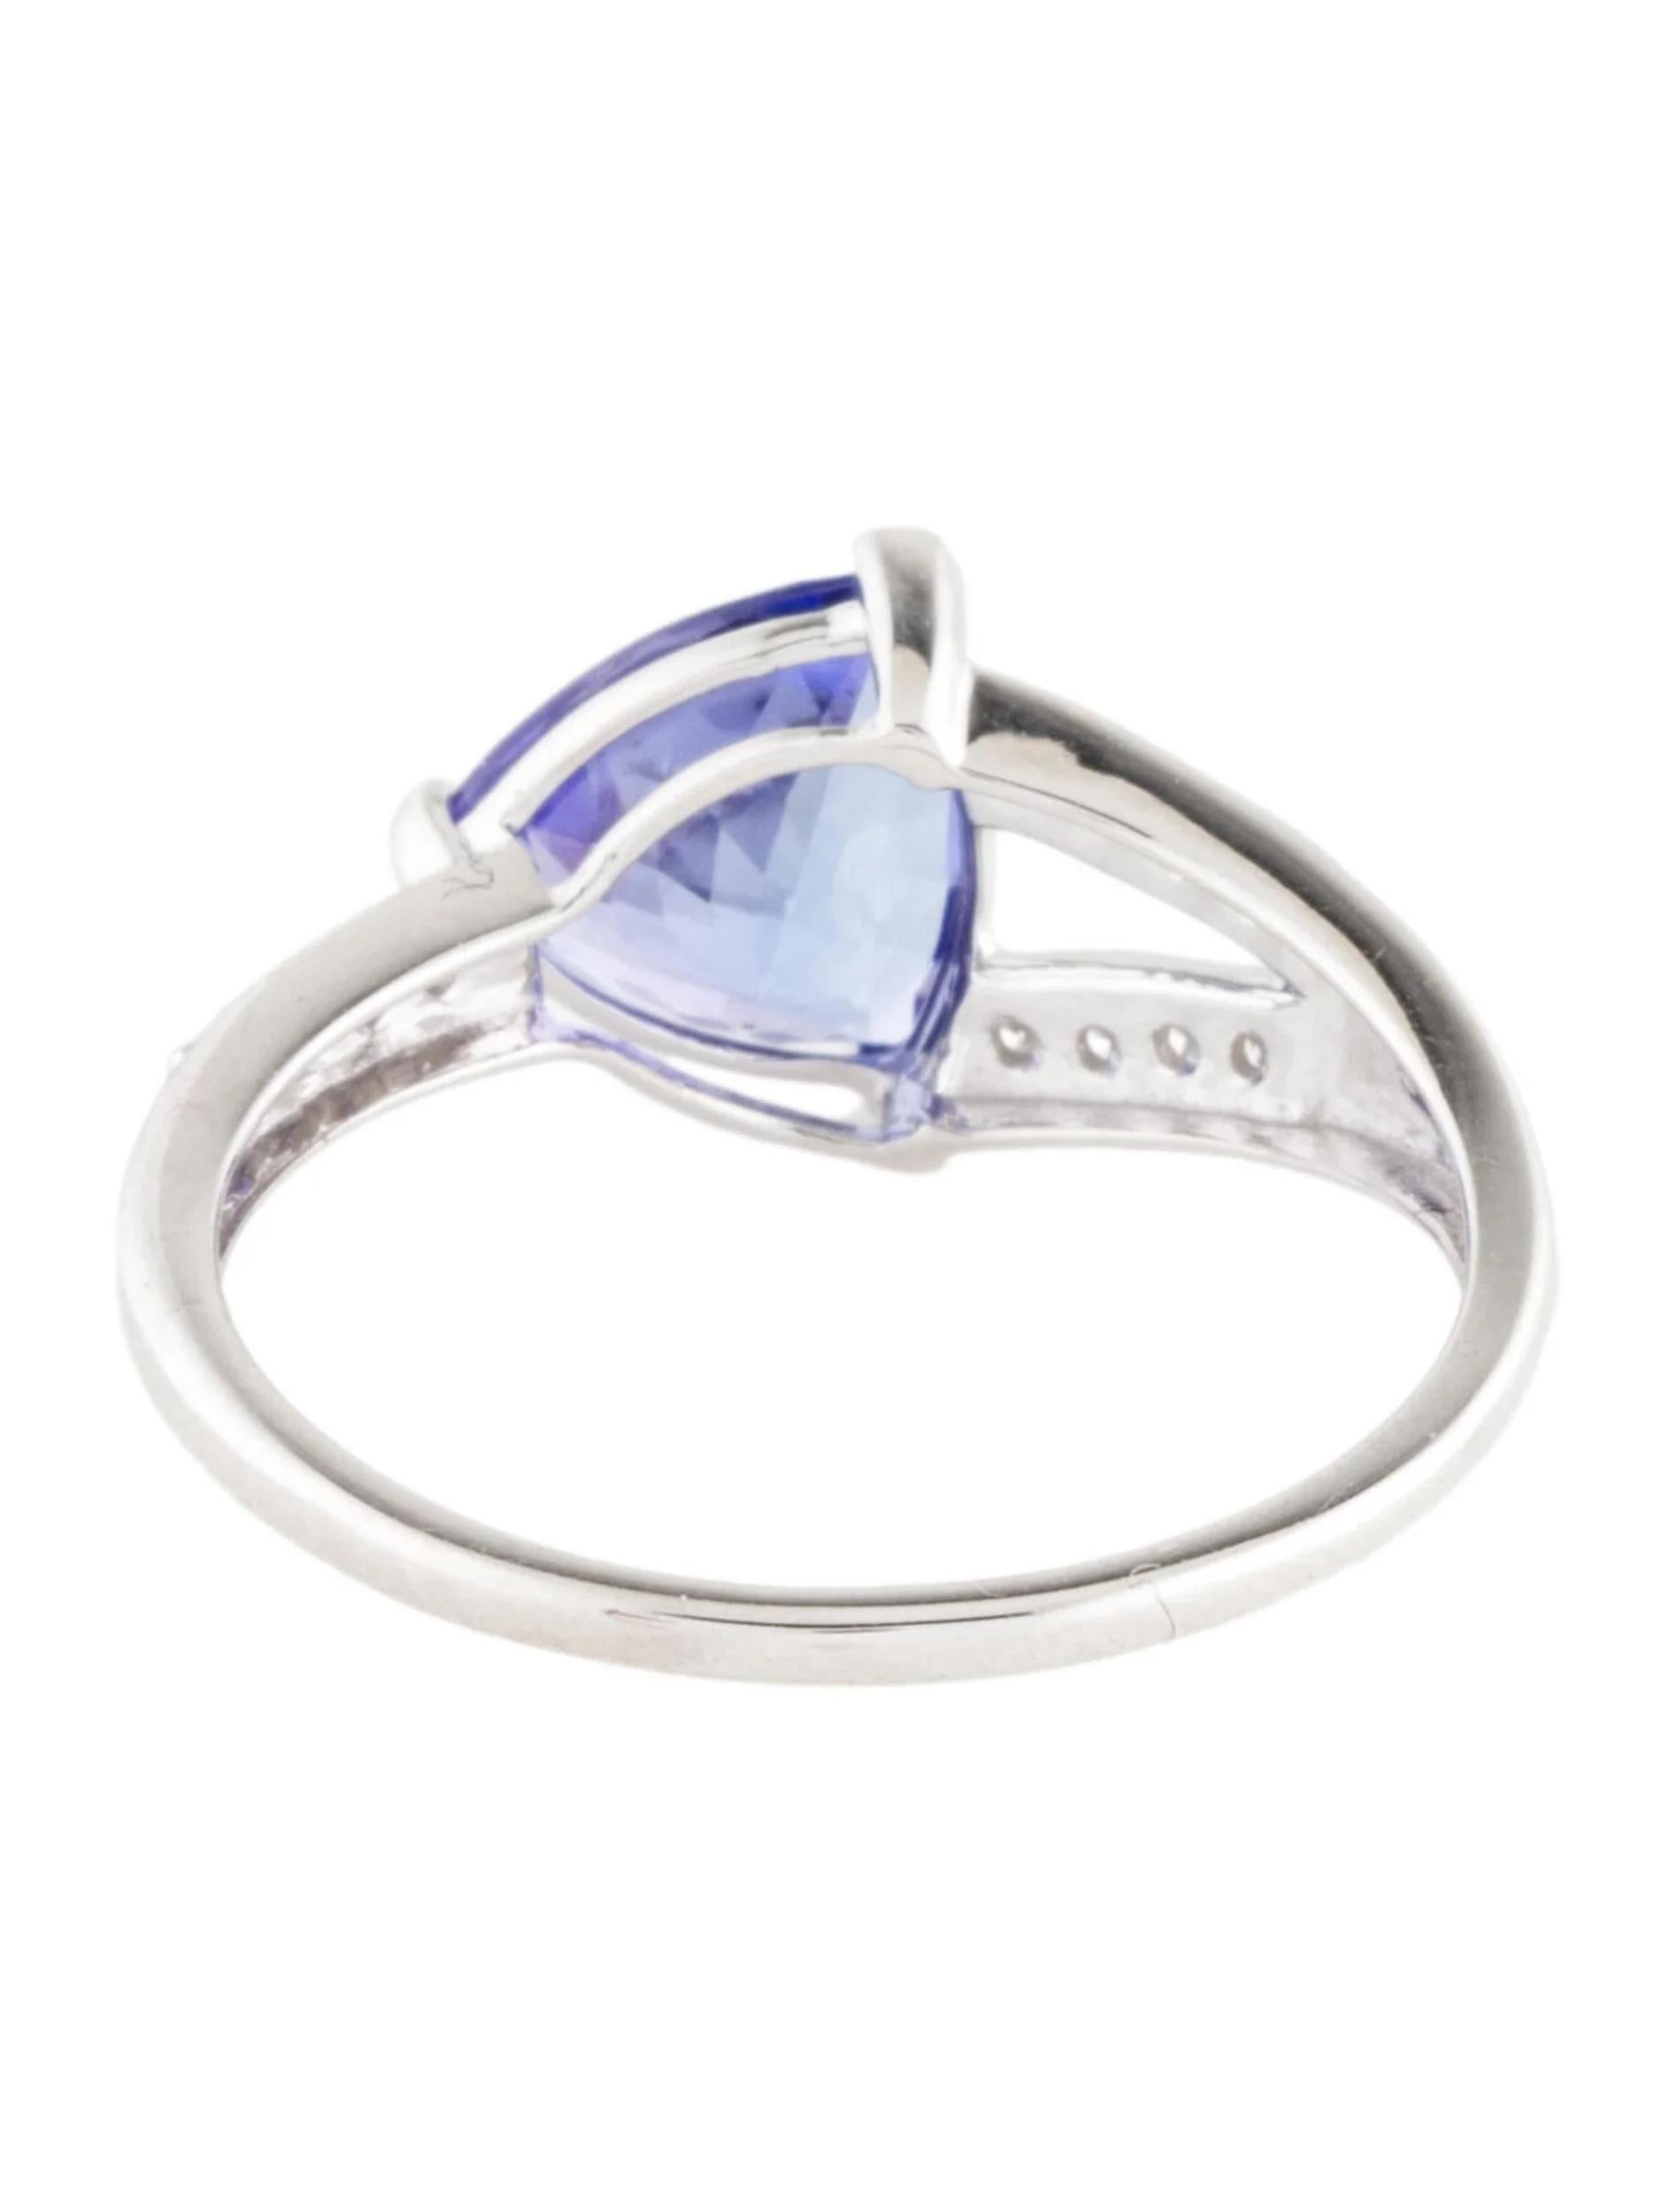 Brilliant Cut Exquisite 14K Tanzanite & Diamond Cocktail Ring, Size 7.25 - Statement Jewelry For Sale